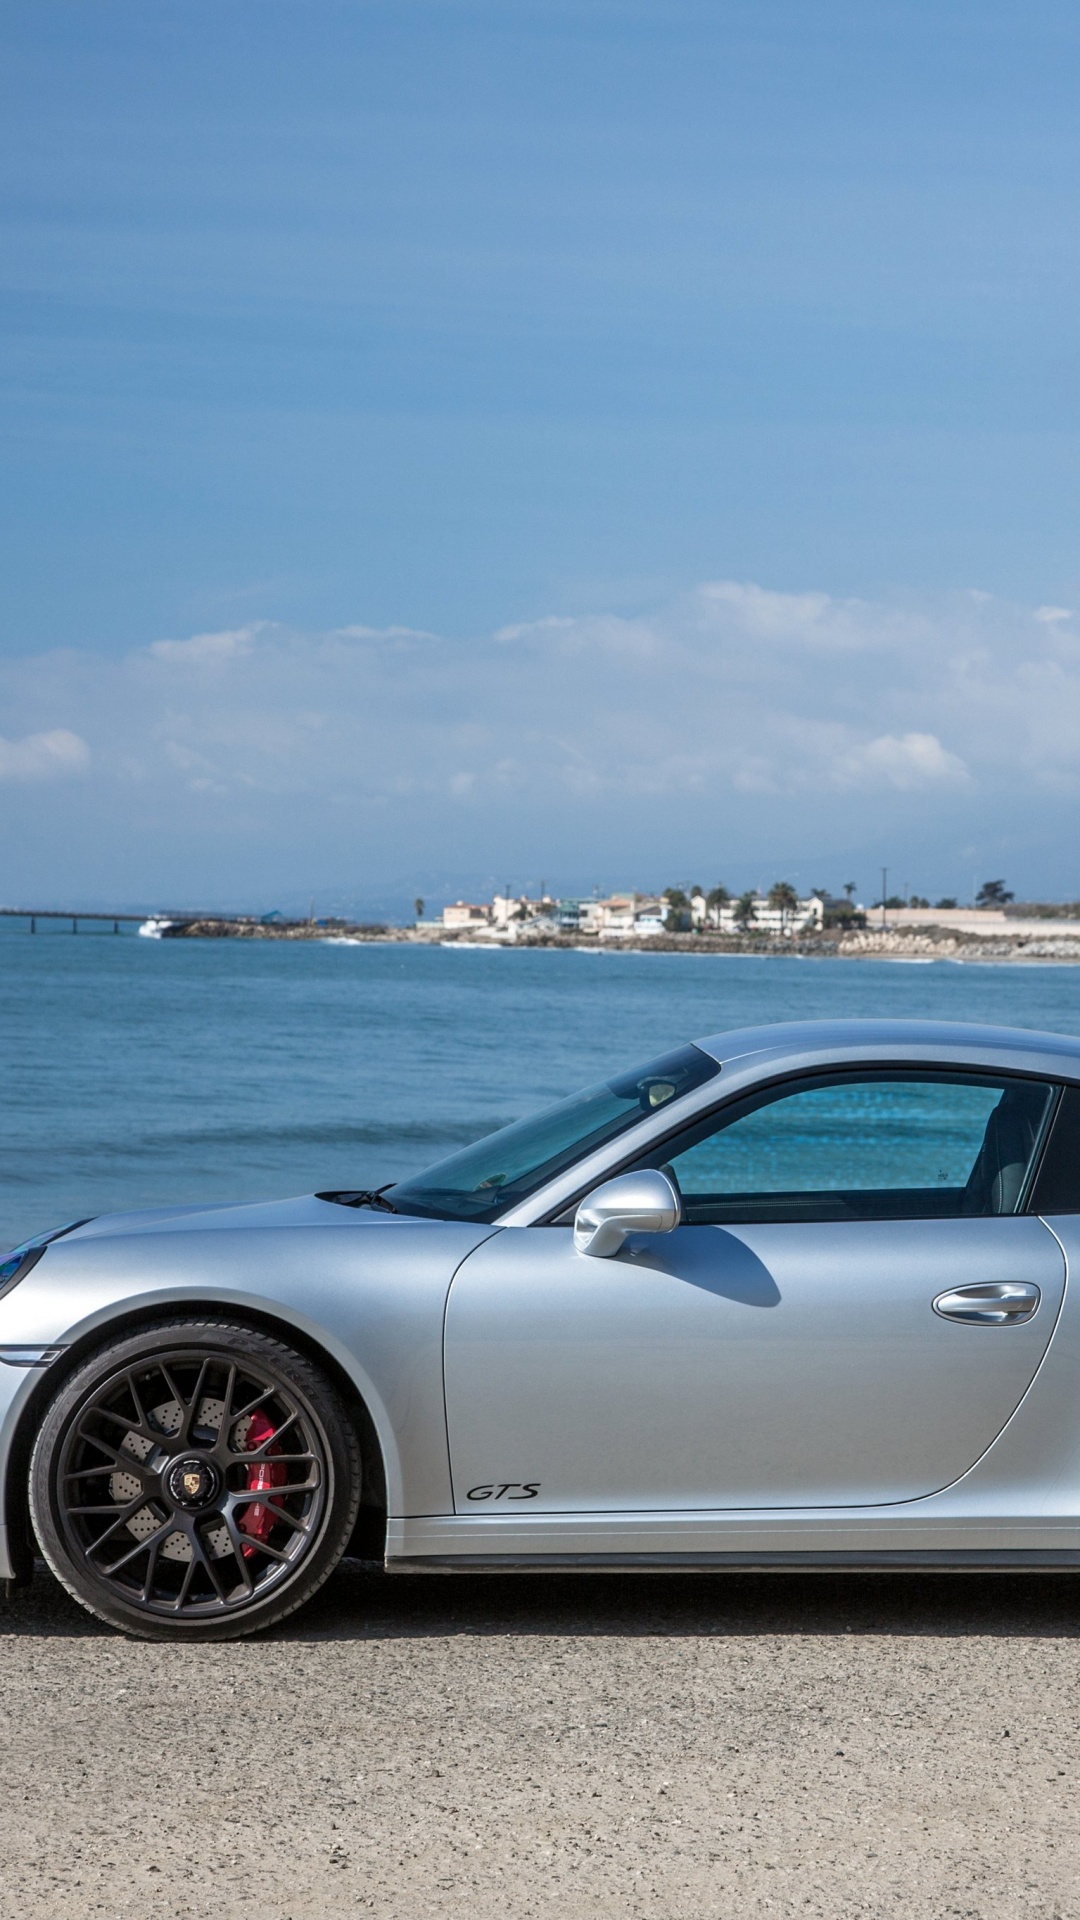 Silver Porsche 911 Parked on Seashore During Daytime. Wallpaper in 1080x1920 Resolution